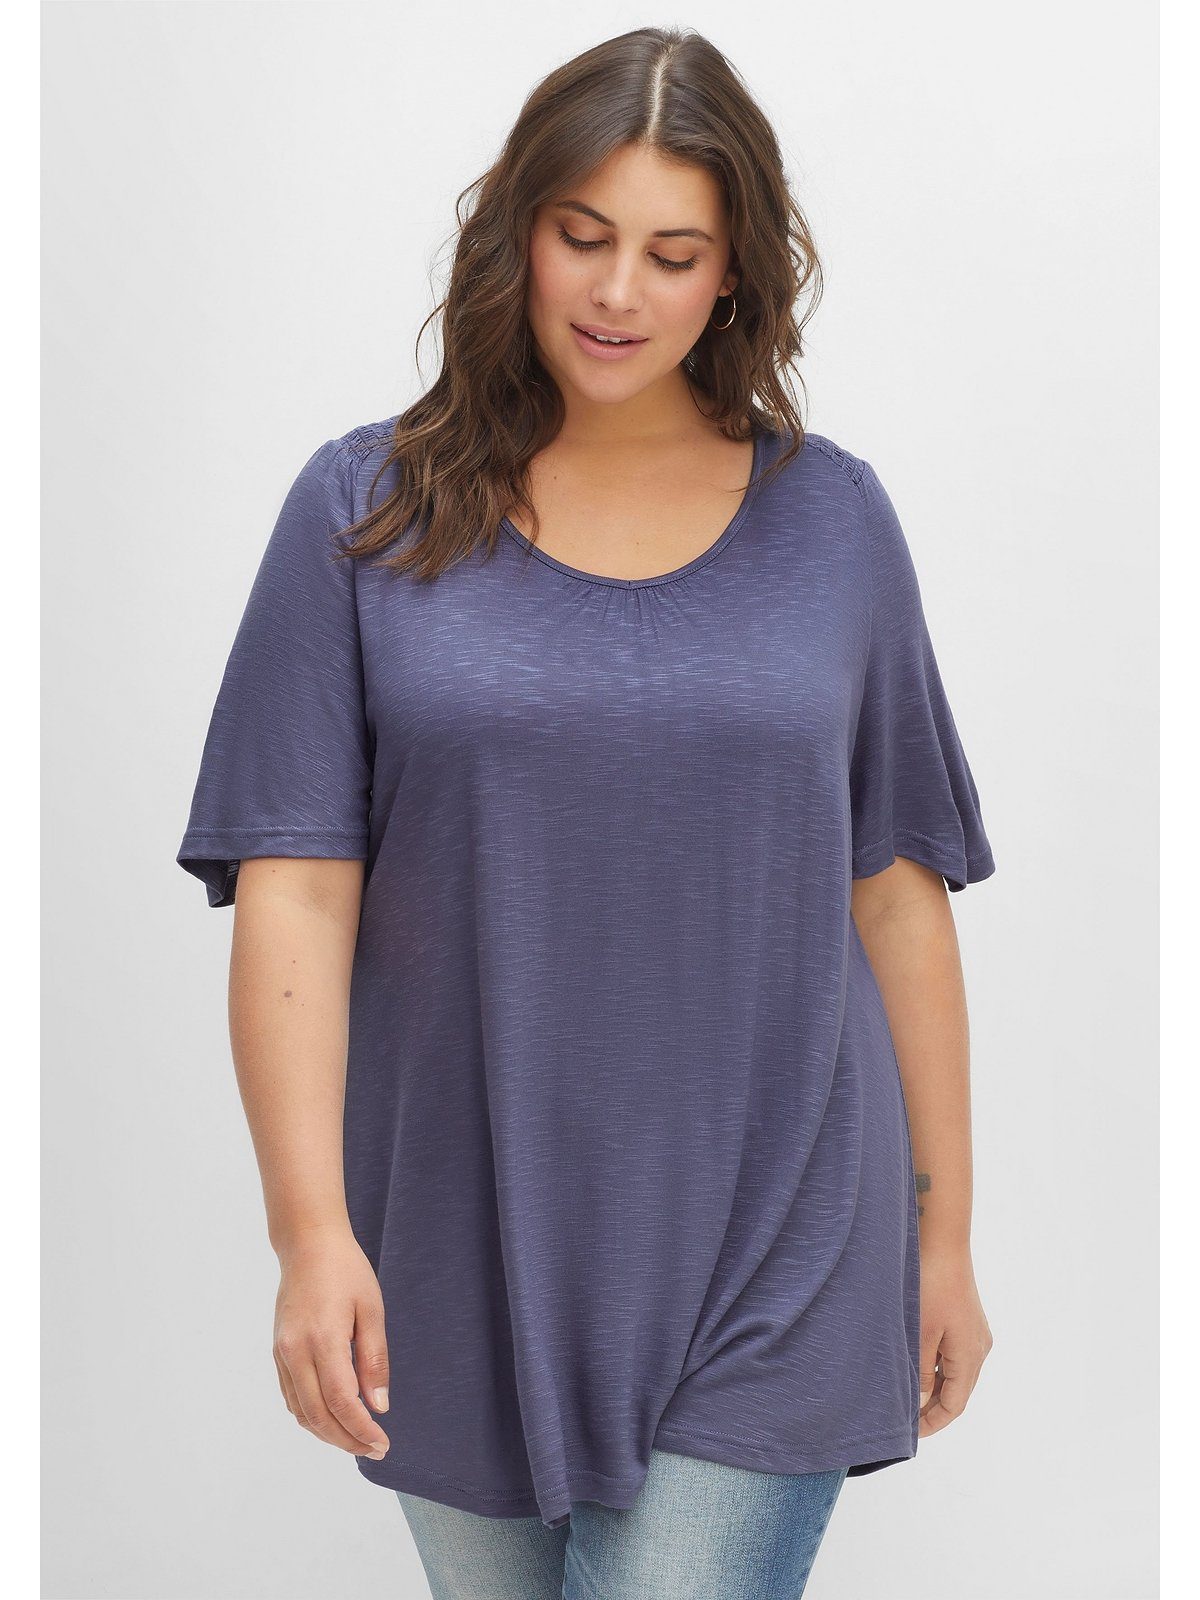 Sheego Longshirt Große Größen in leicht transparenter Flammgarn-Optik indigo | V-Shirts